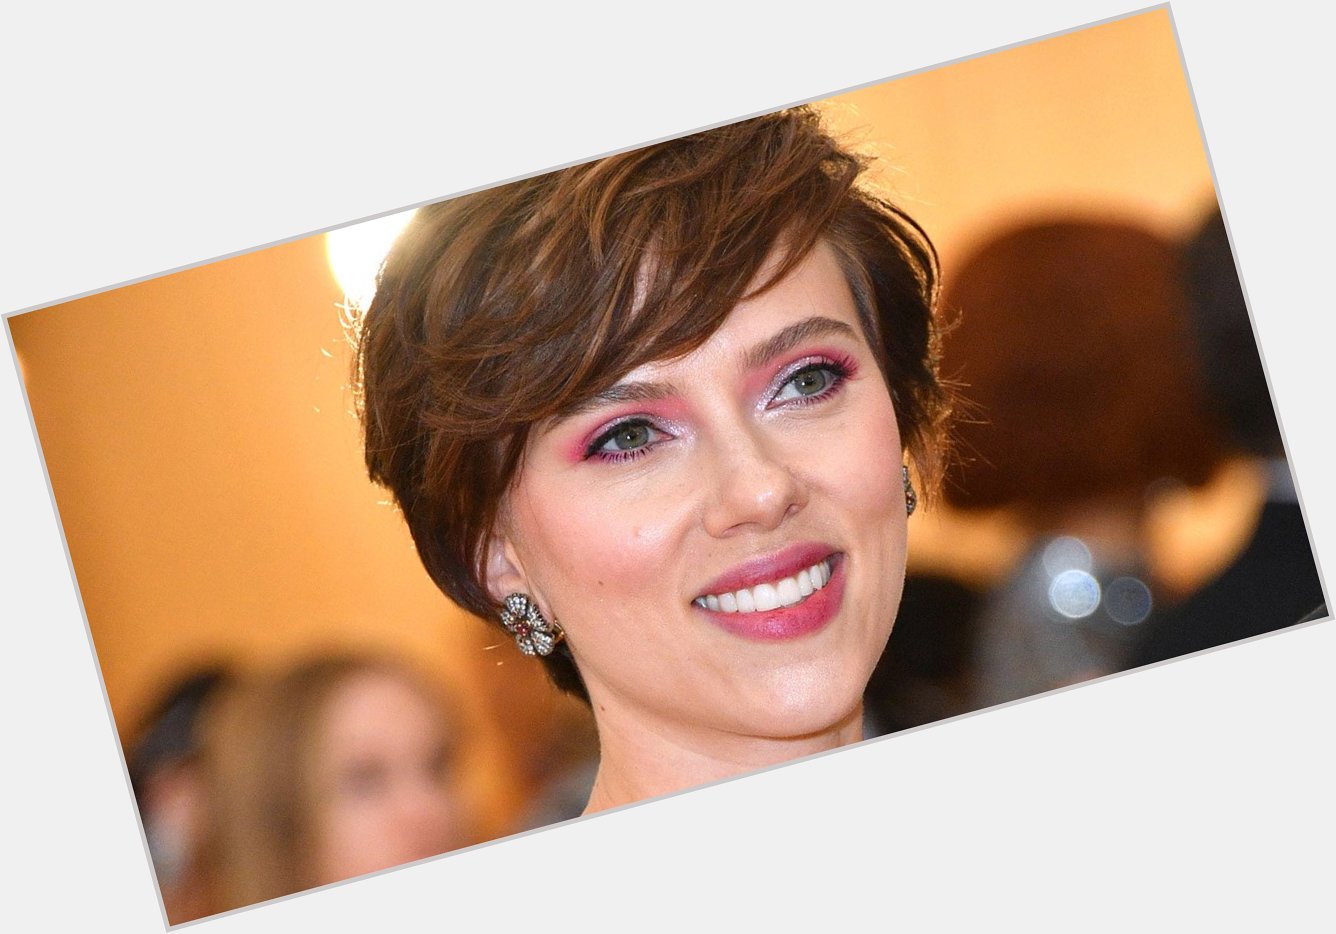 Happy birthday, Scarlett Johansson! See her best beauty looks:  